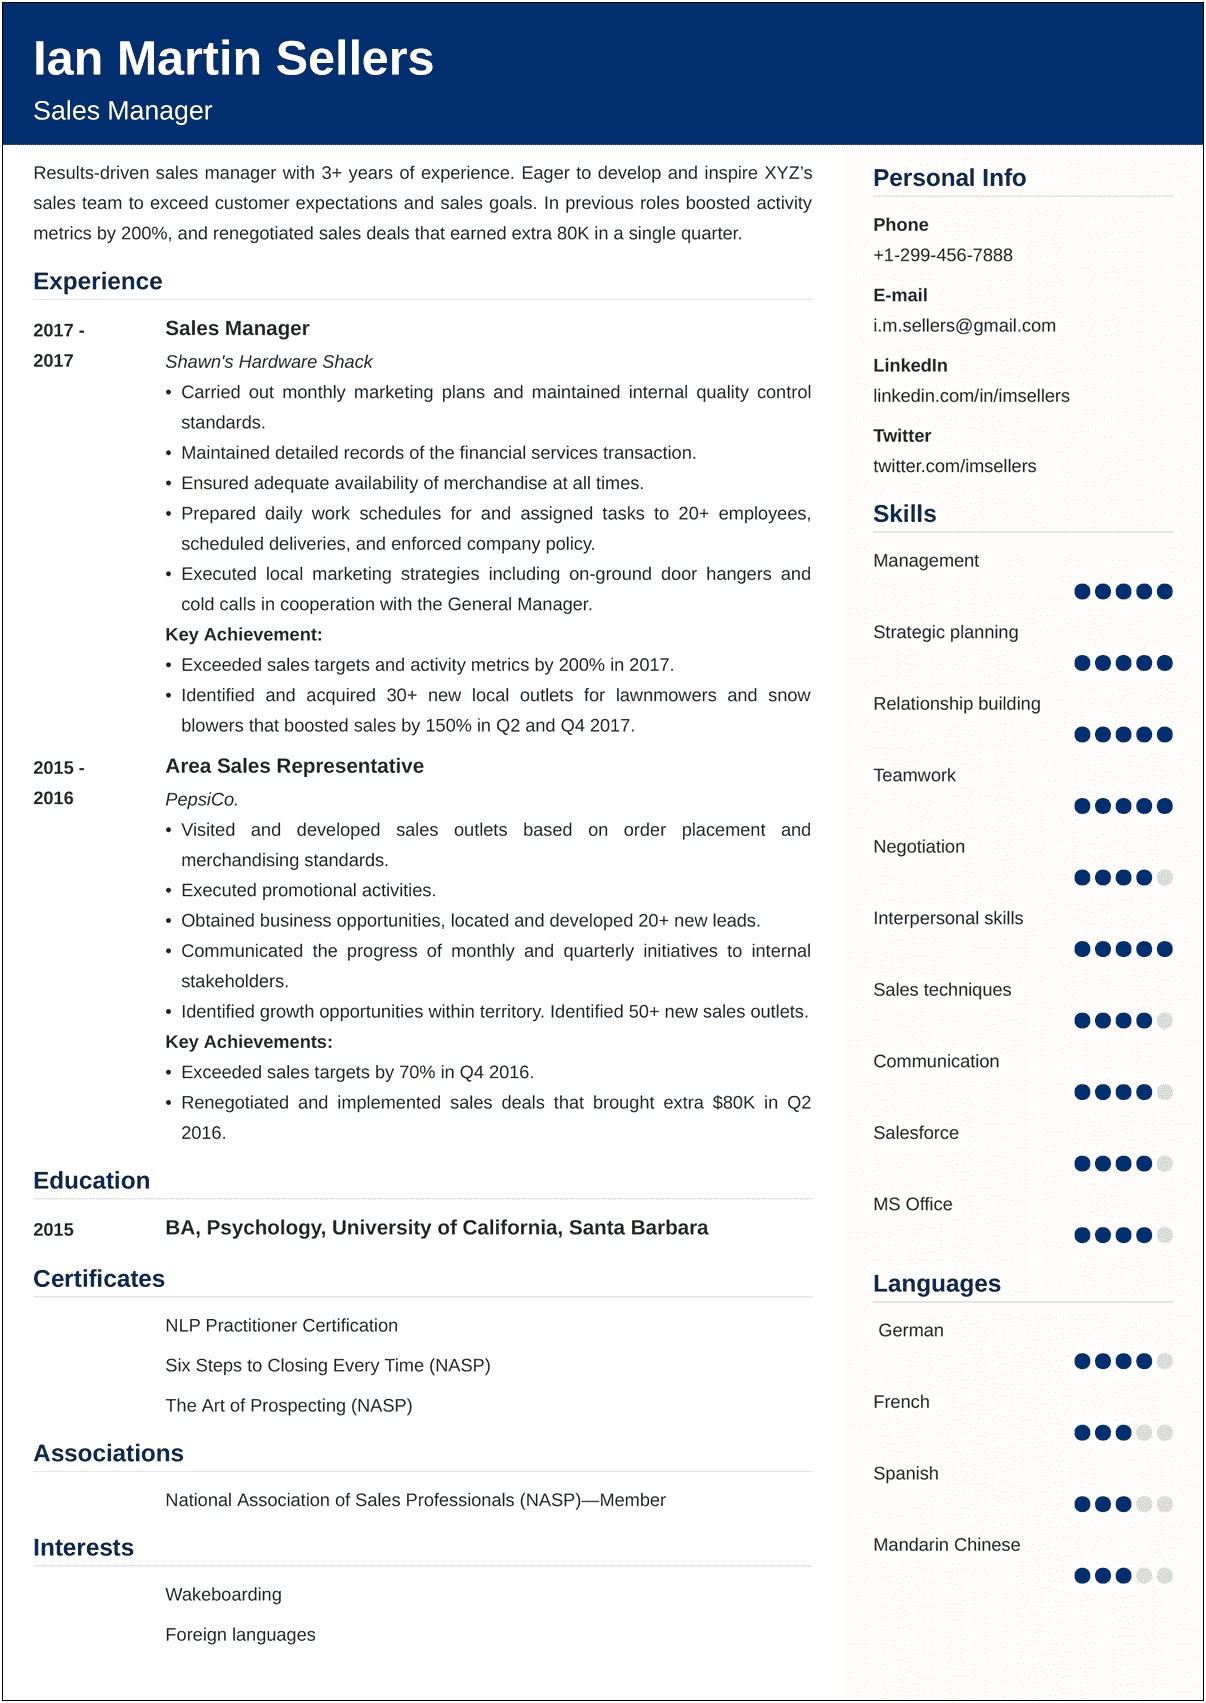 Best Resume Format For Sales Manager